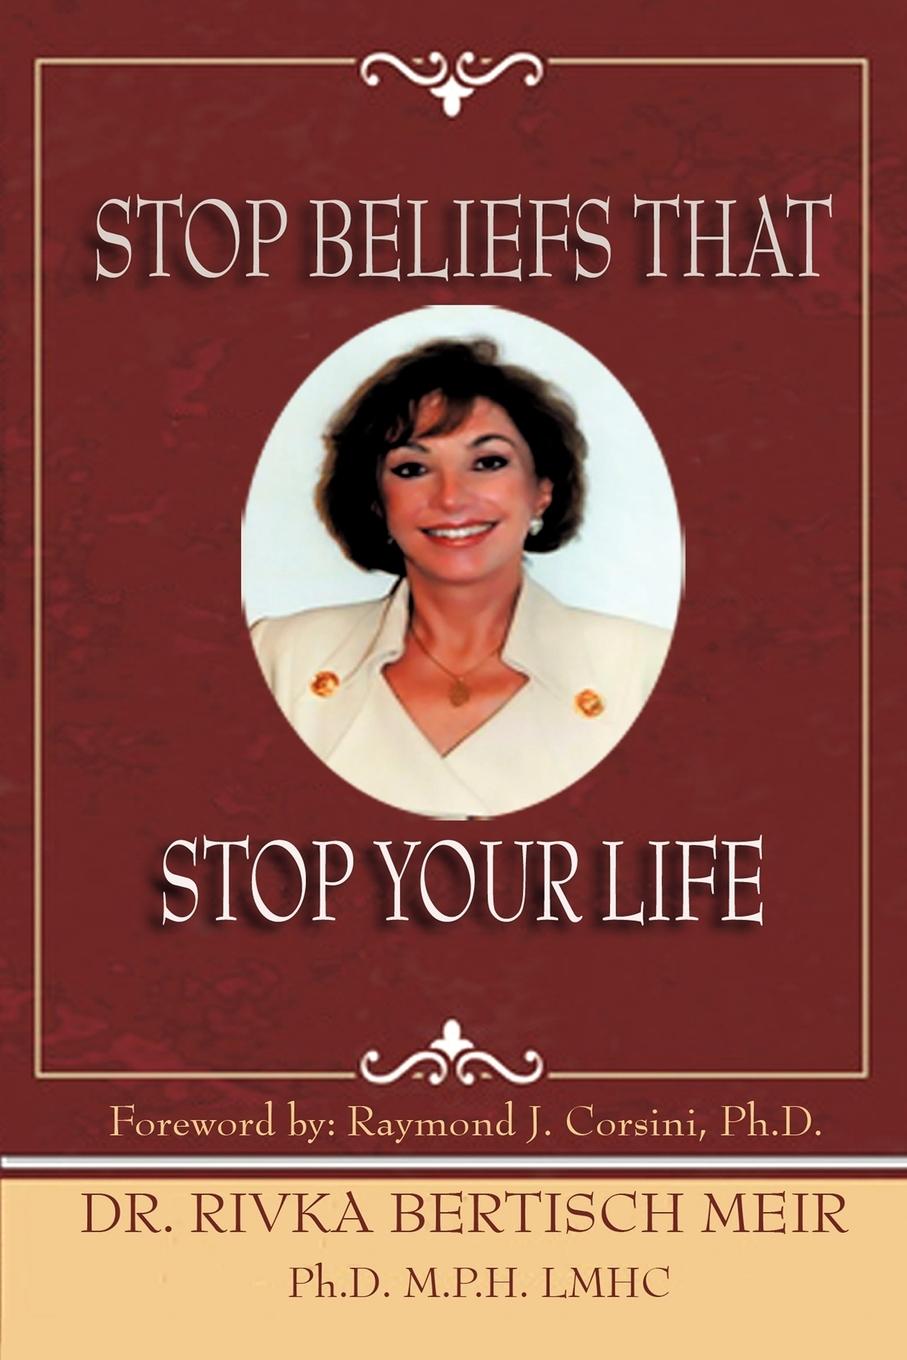 Stop Beliefs That Stop Your Life - Meir, Ph. D. M. P. H. Rivka Bertisch